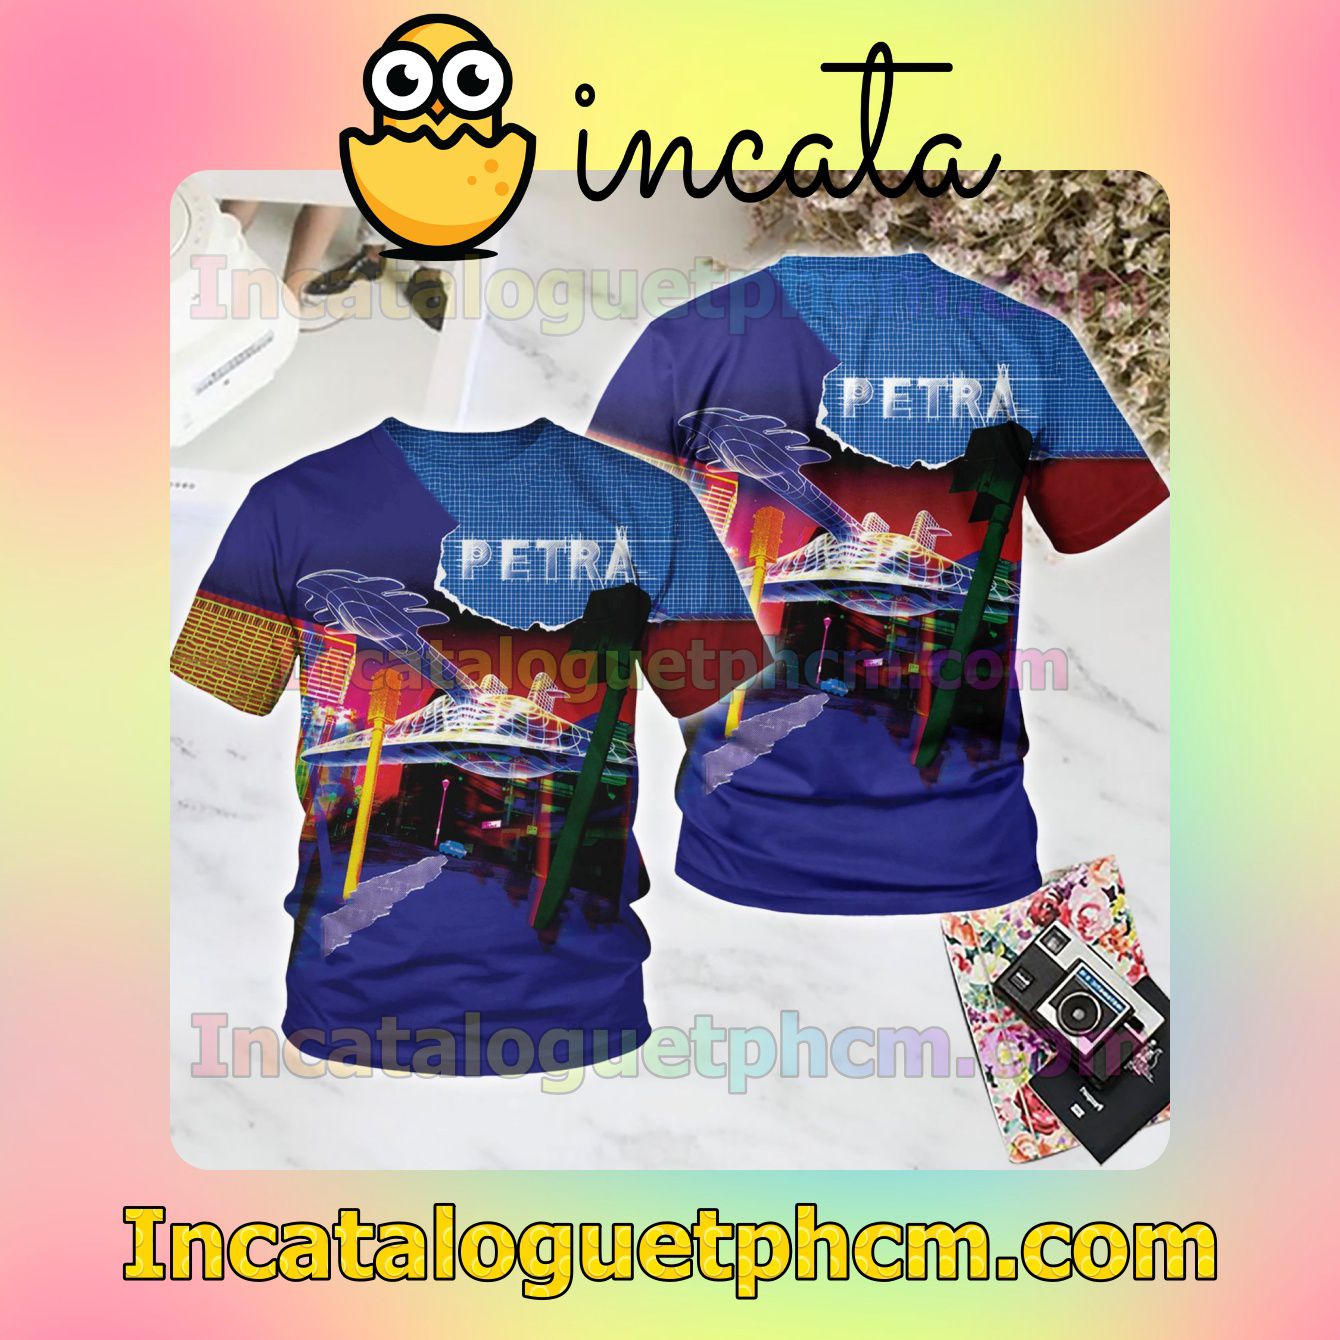 Petra Back To The Street Album Cover Custom Shirts